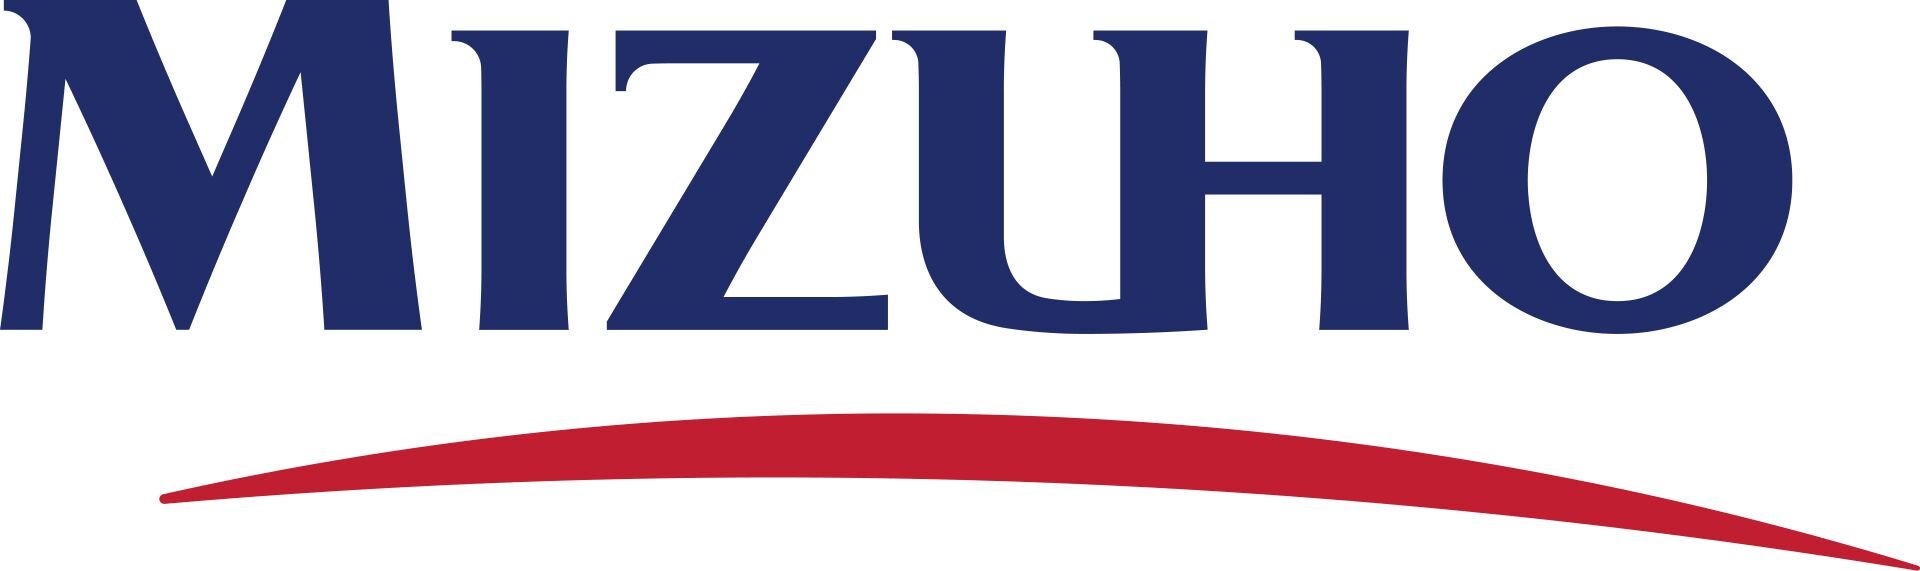 Large-Mizuho logo positive_PMS.jpg